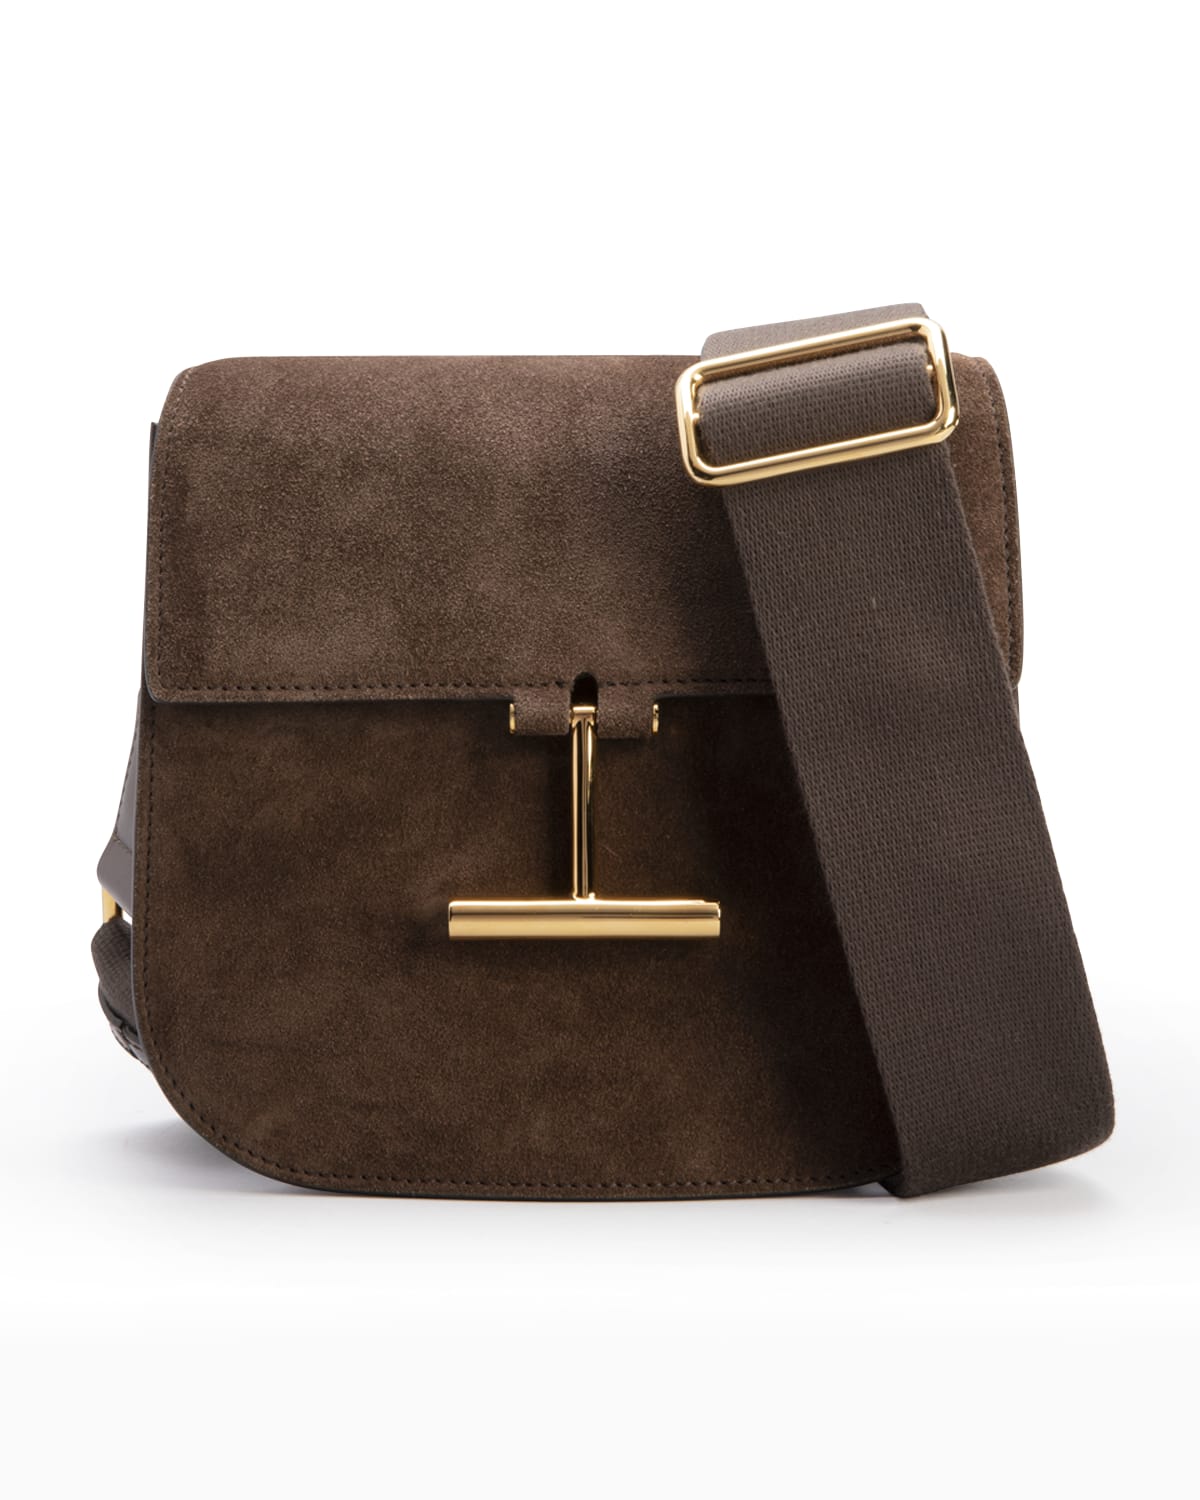 TOM FORD Tara Mini Leather Crossbody Bag | Neiman Marcus